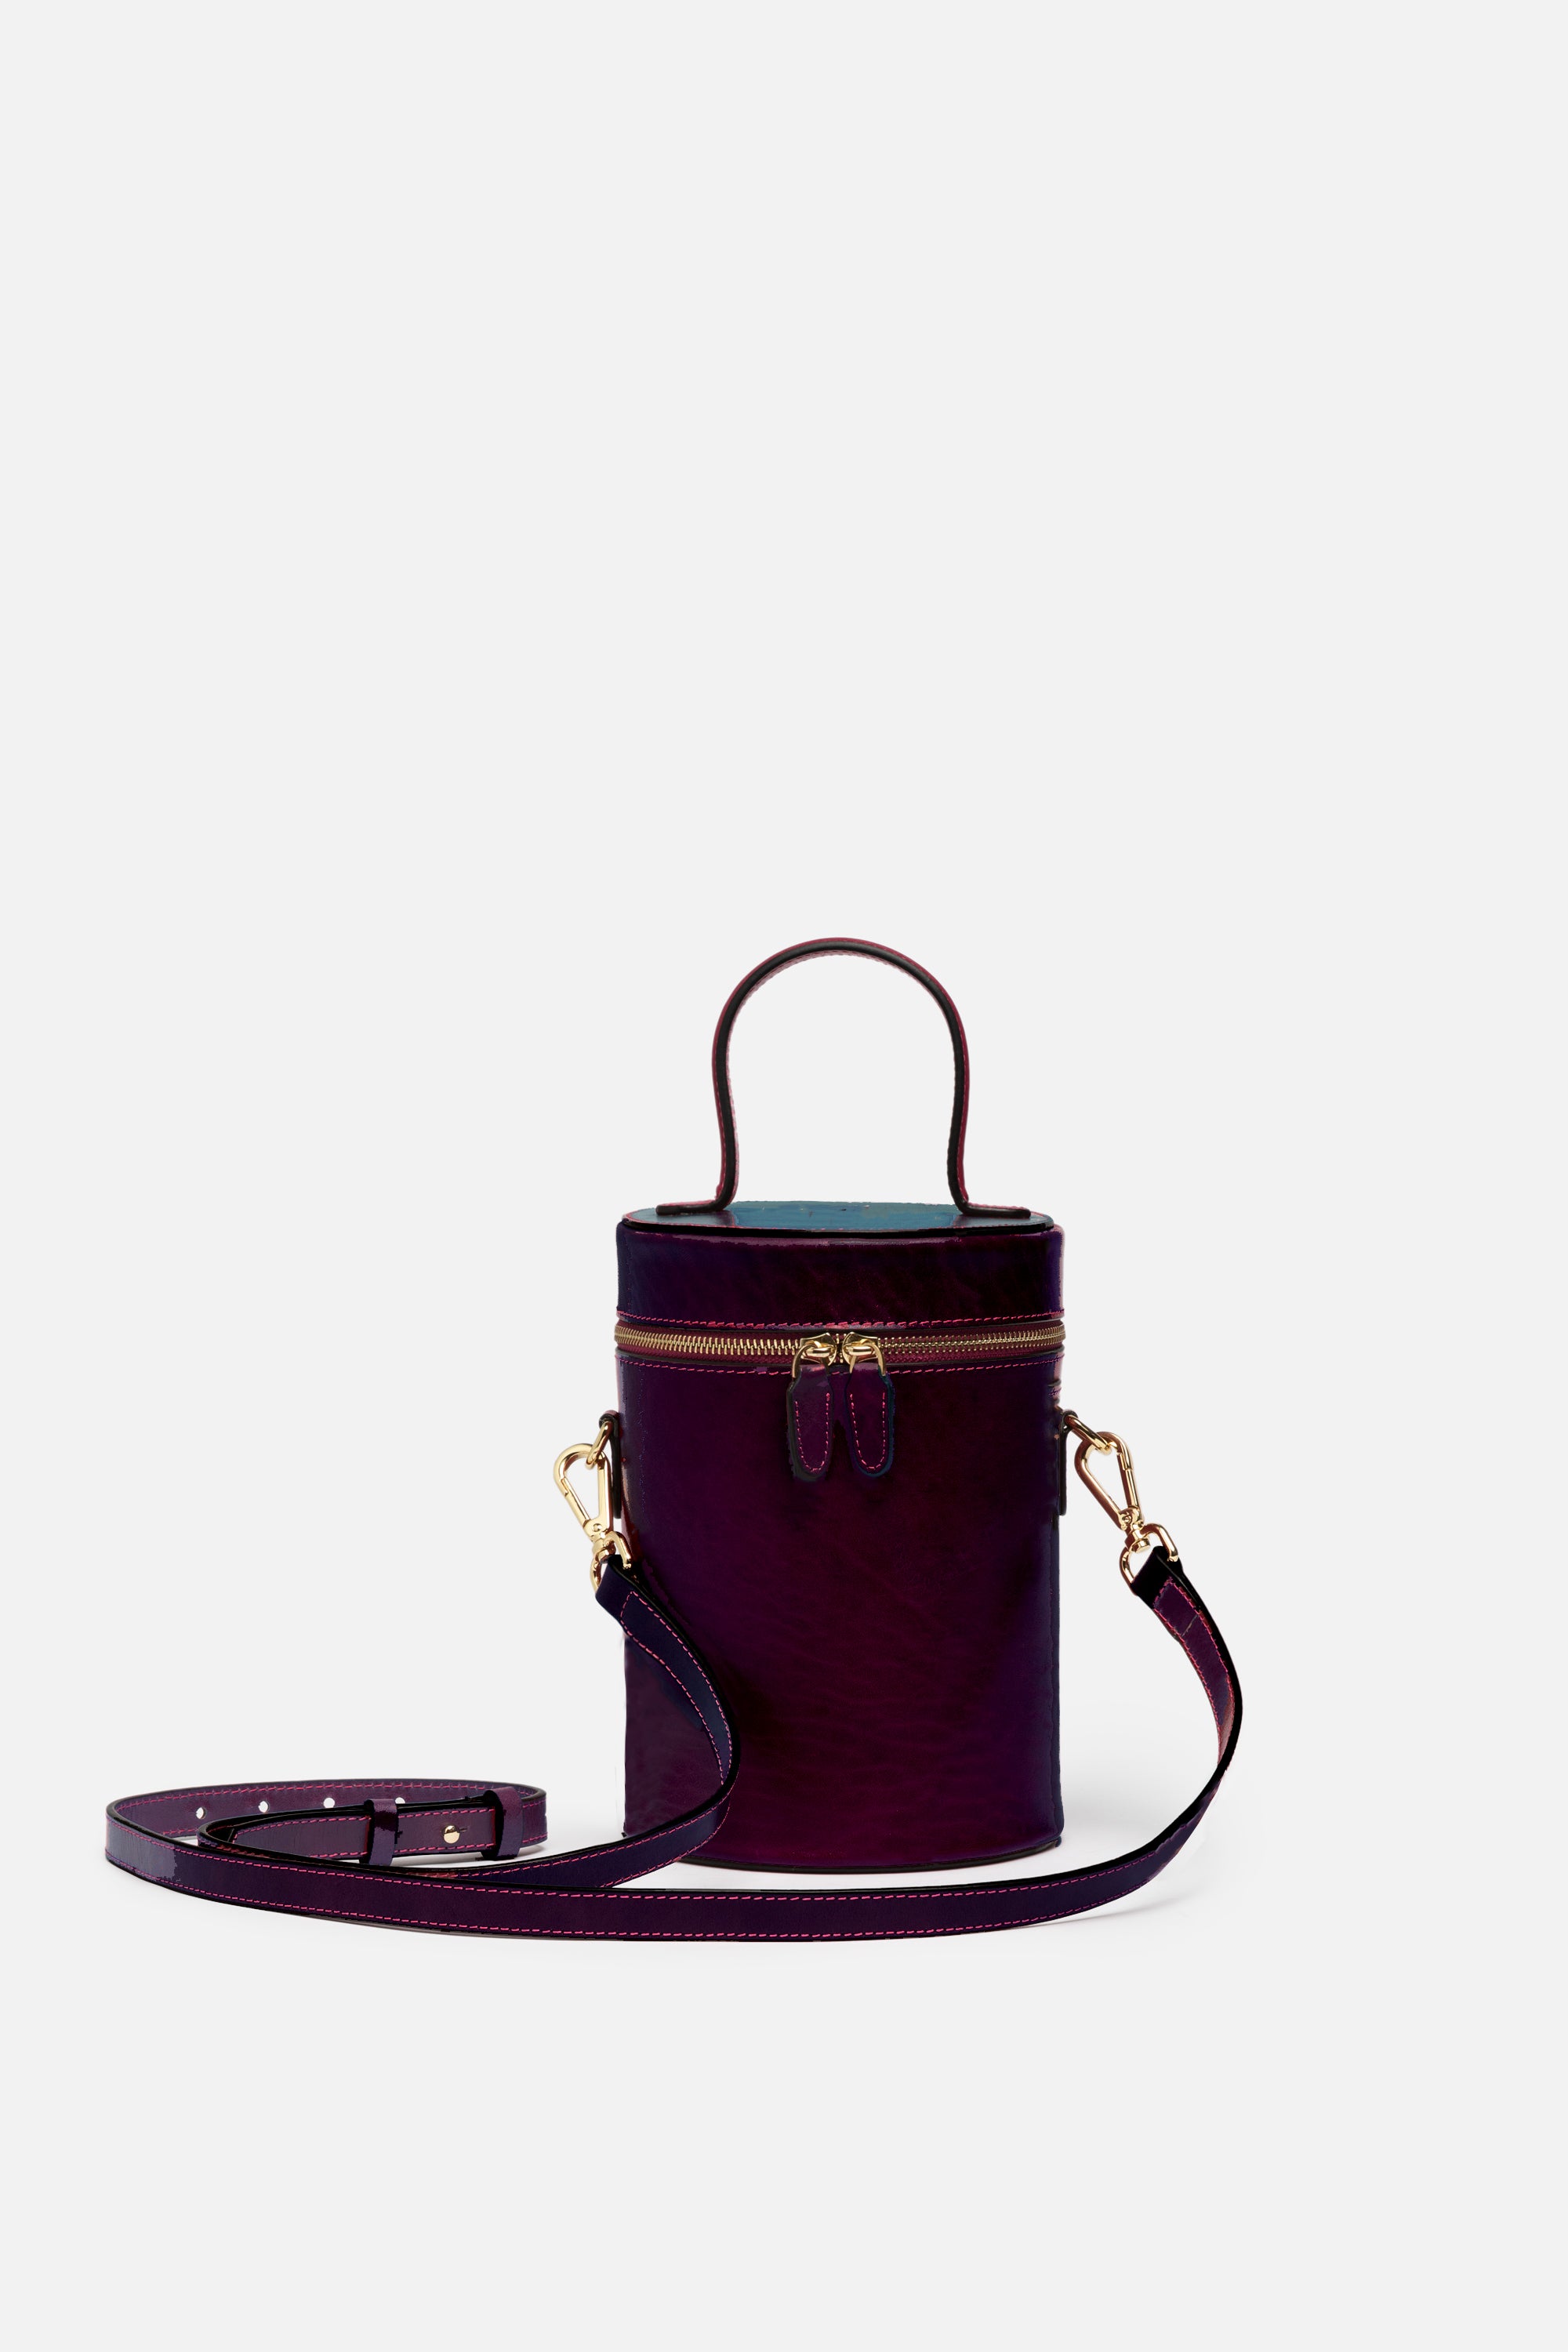 Leather Handbag Purple - Messenger Bag Tote | Purple bags, Leather handbags,  Purple purse